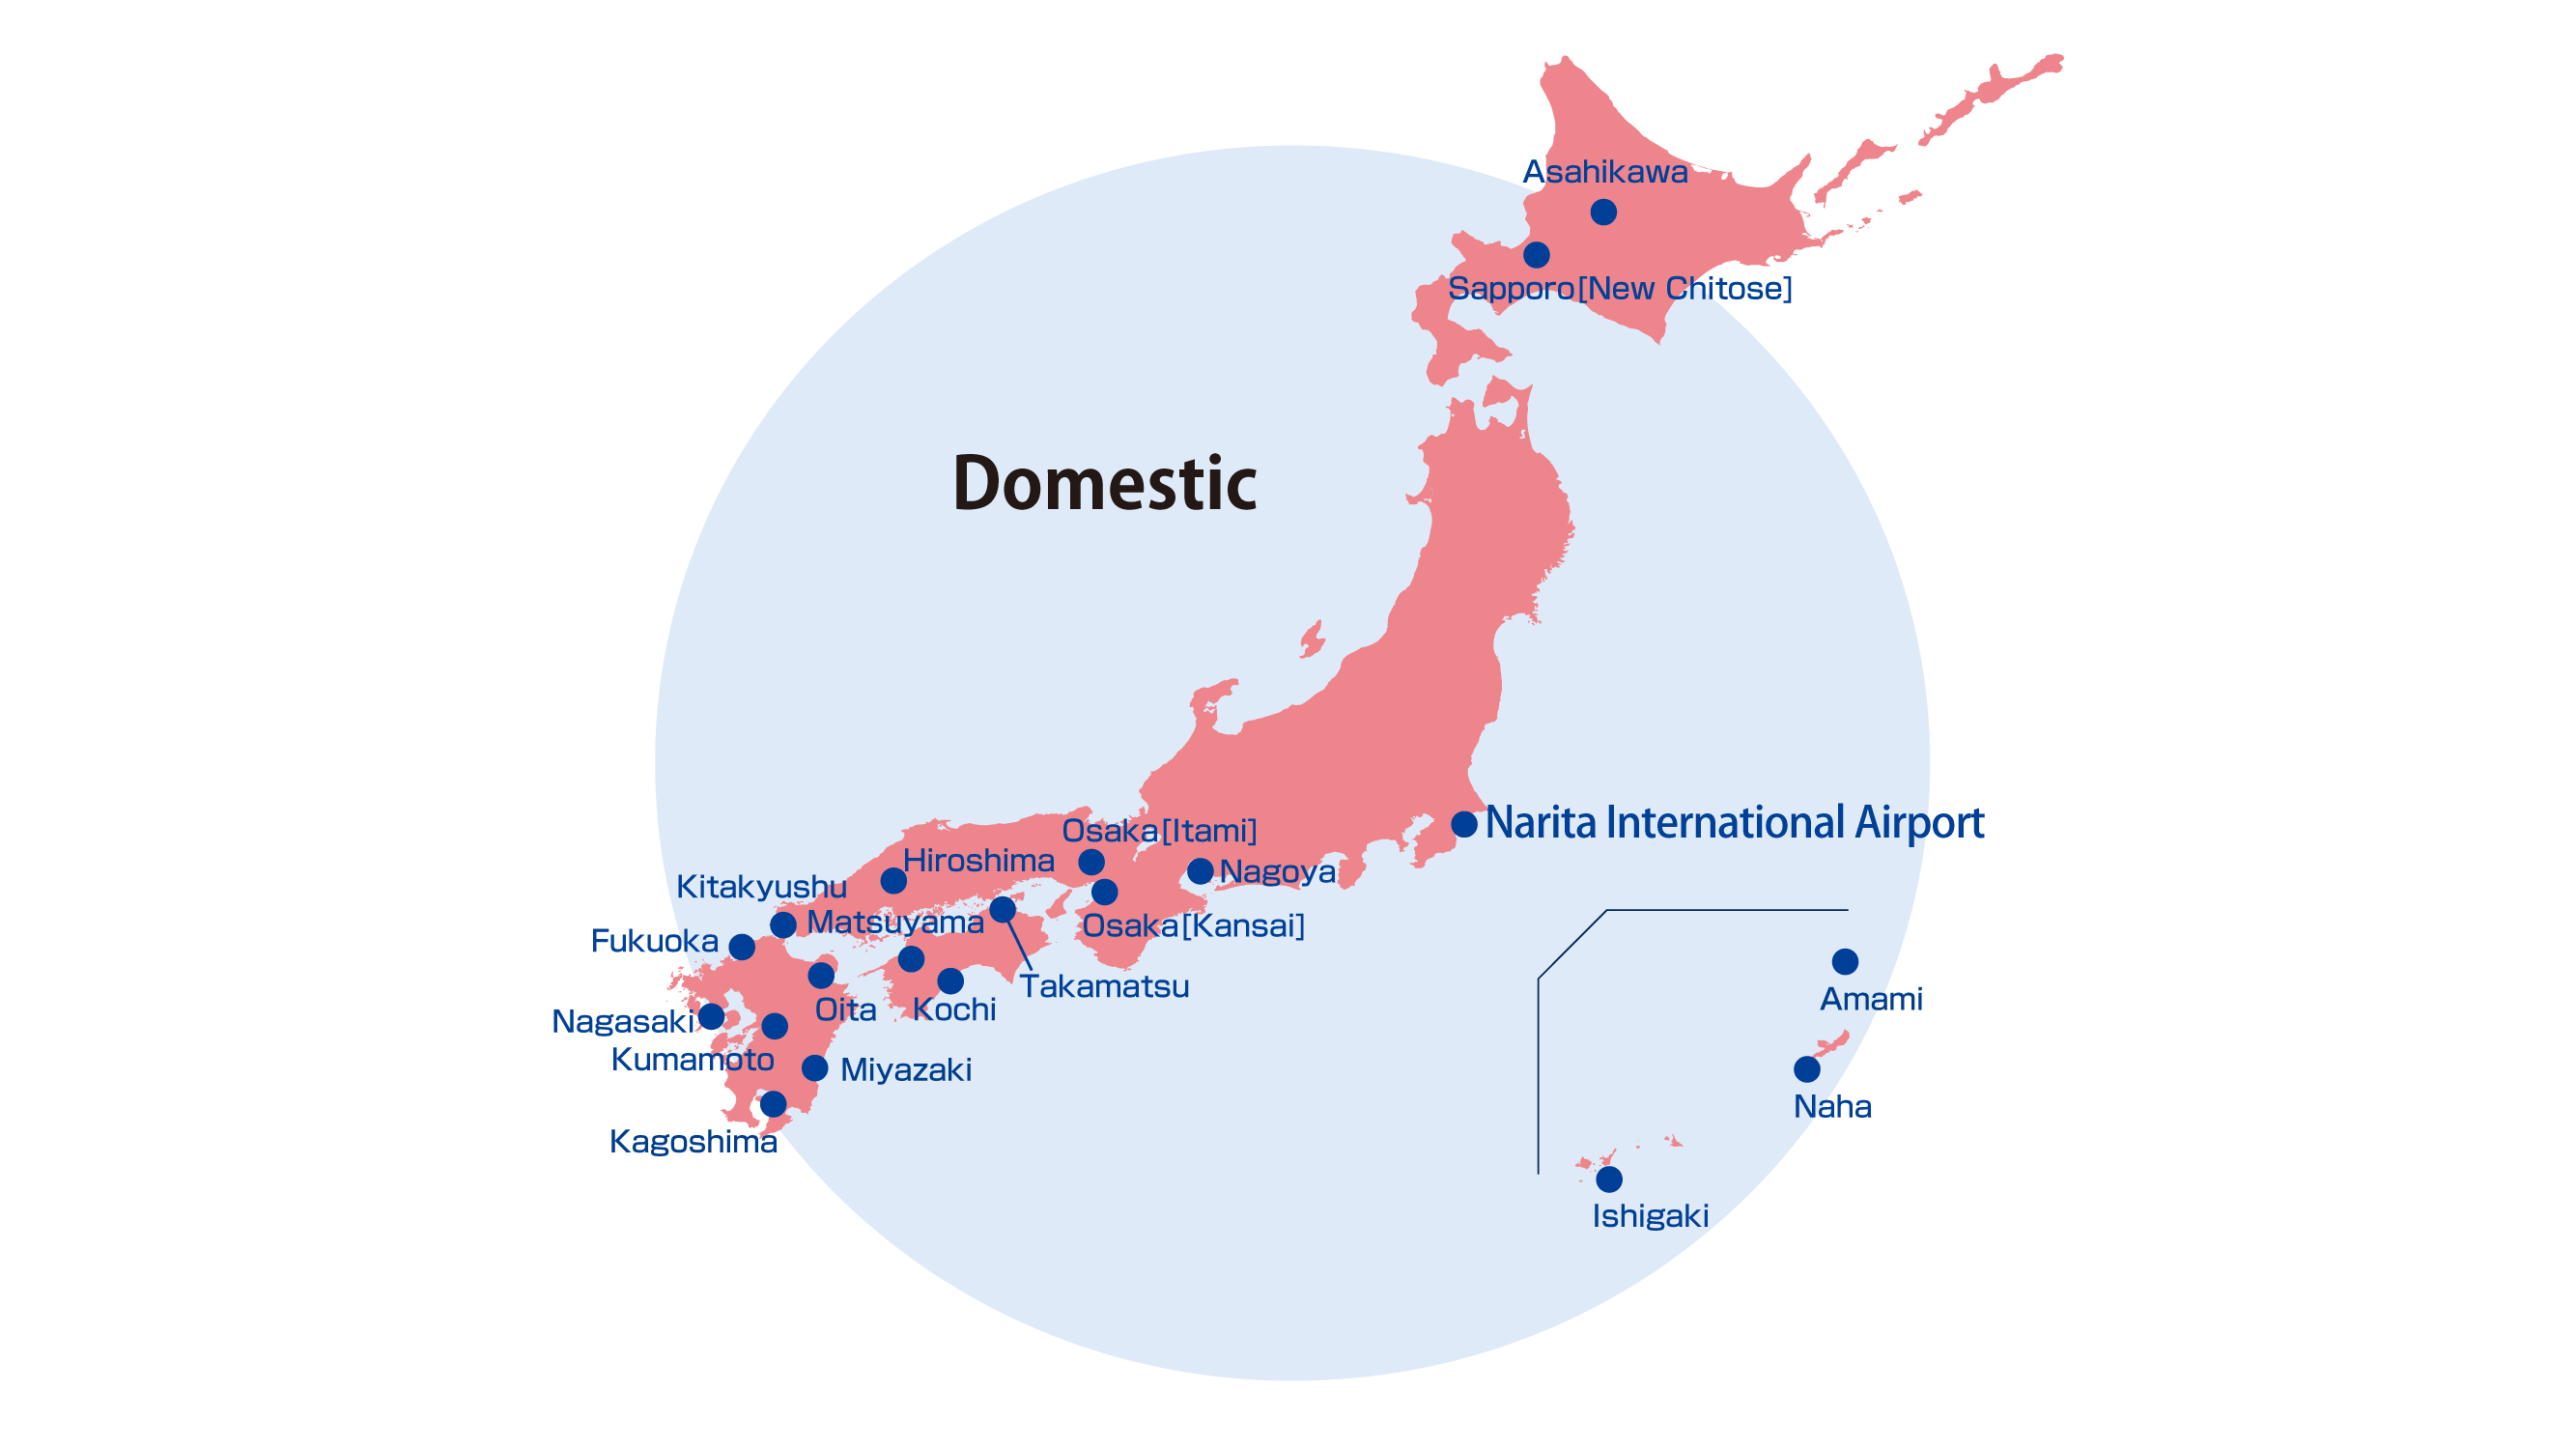 Domestic flight destination city image map